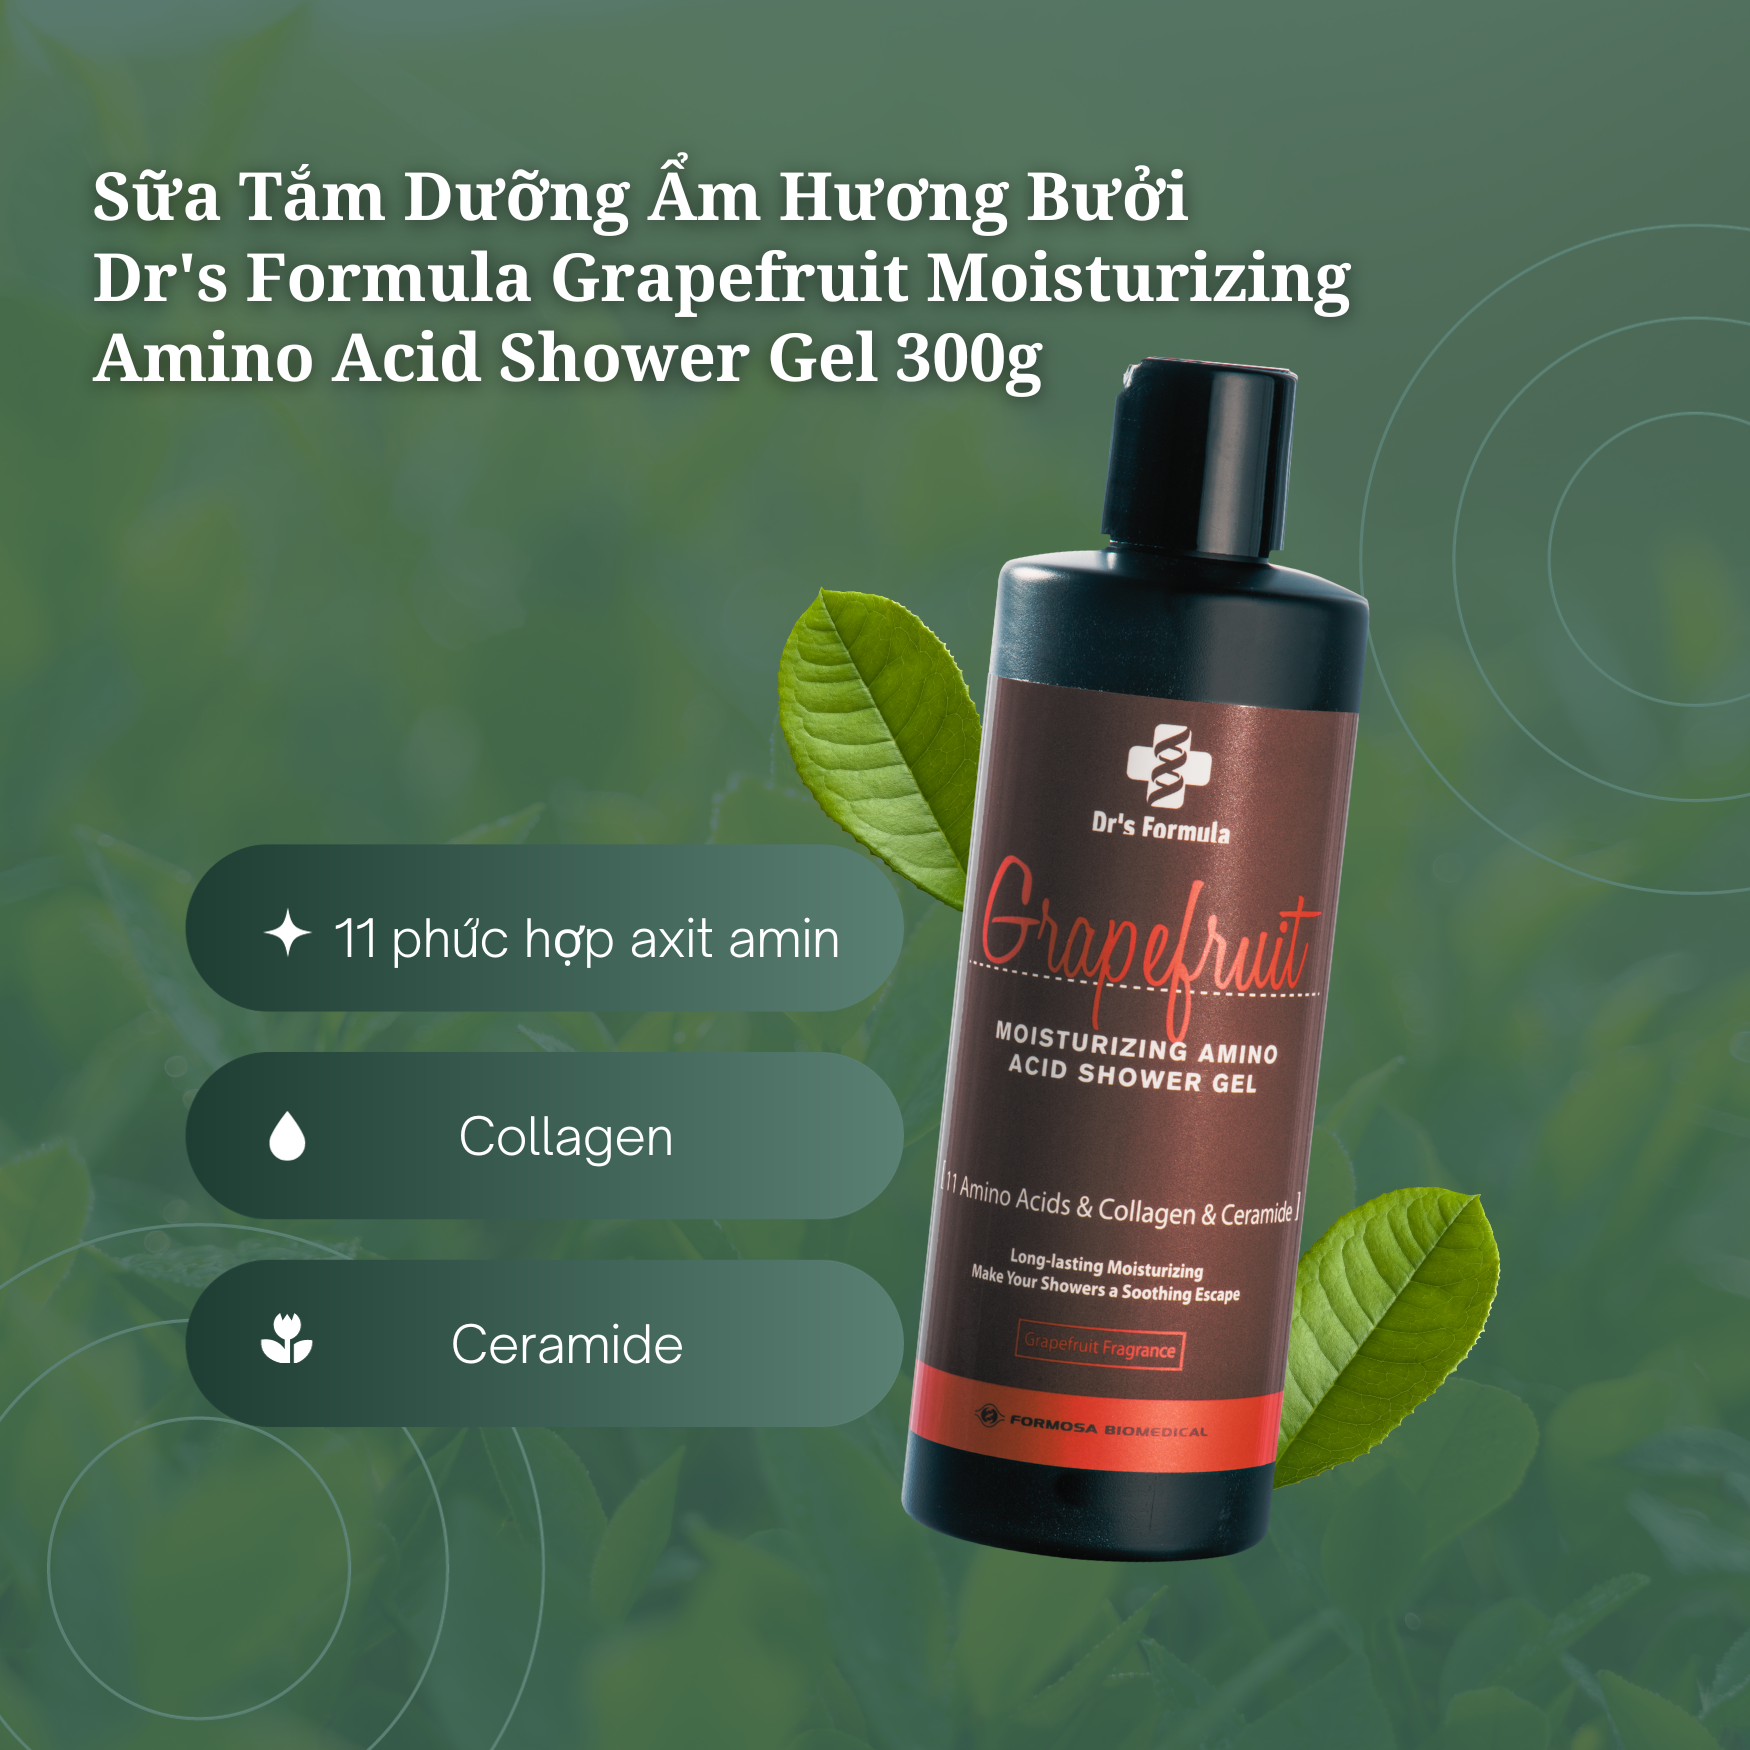 Sữa Tắm Axit Amin Hương Bưởi Dưỡng Ẩm Dr's Formula Grapefruit Moisturizing Amino Acid Shower Gel